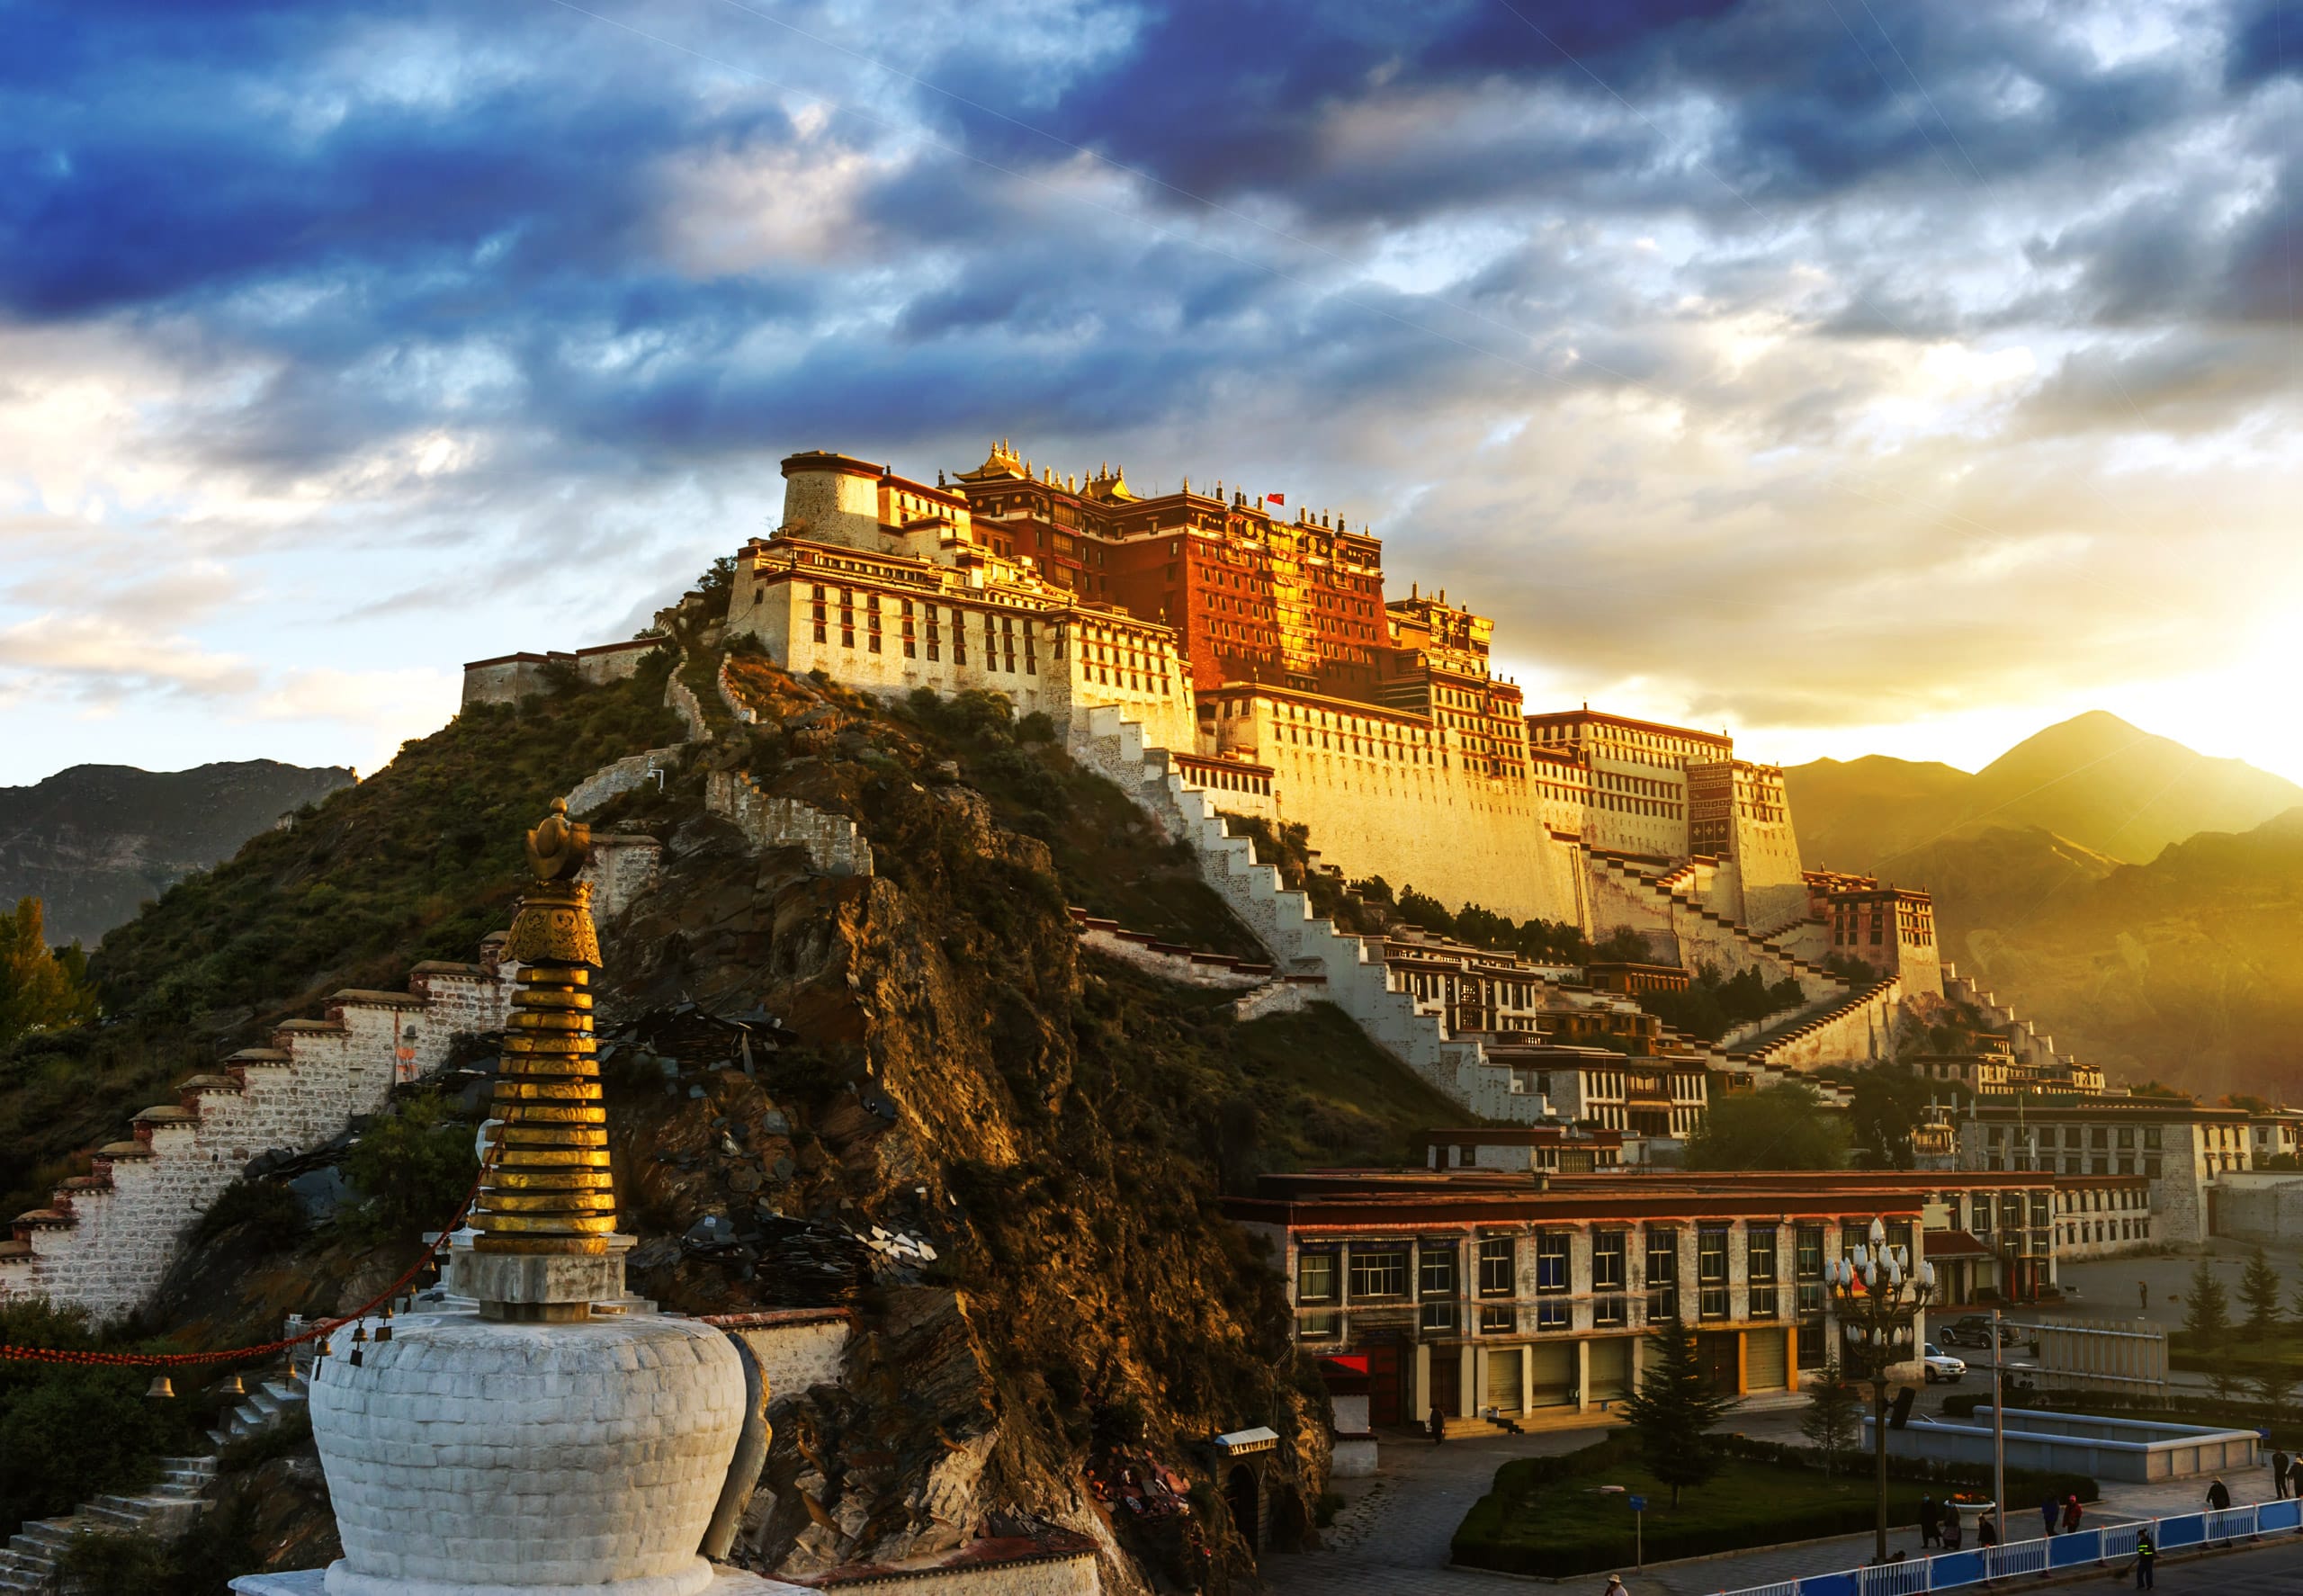 26-daagse groepsrondreis Grand Tour China & Tibet